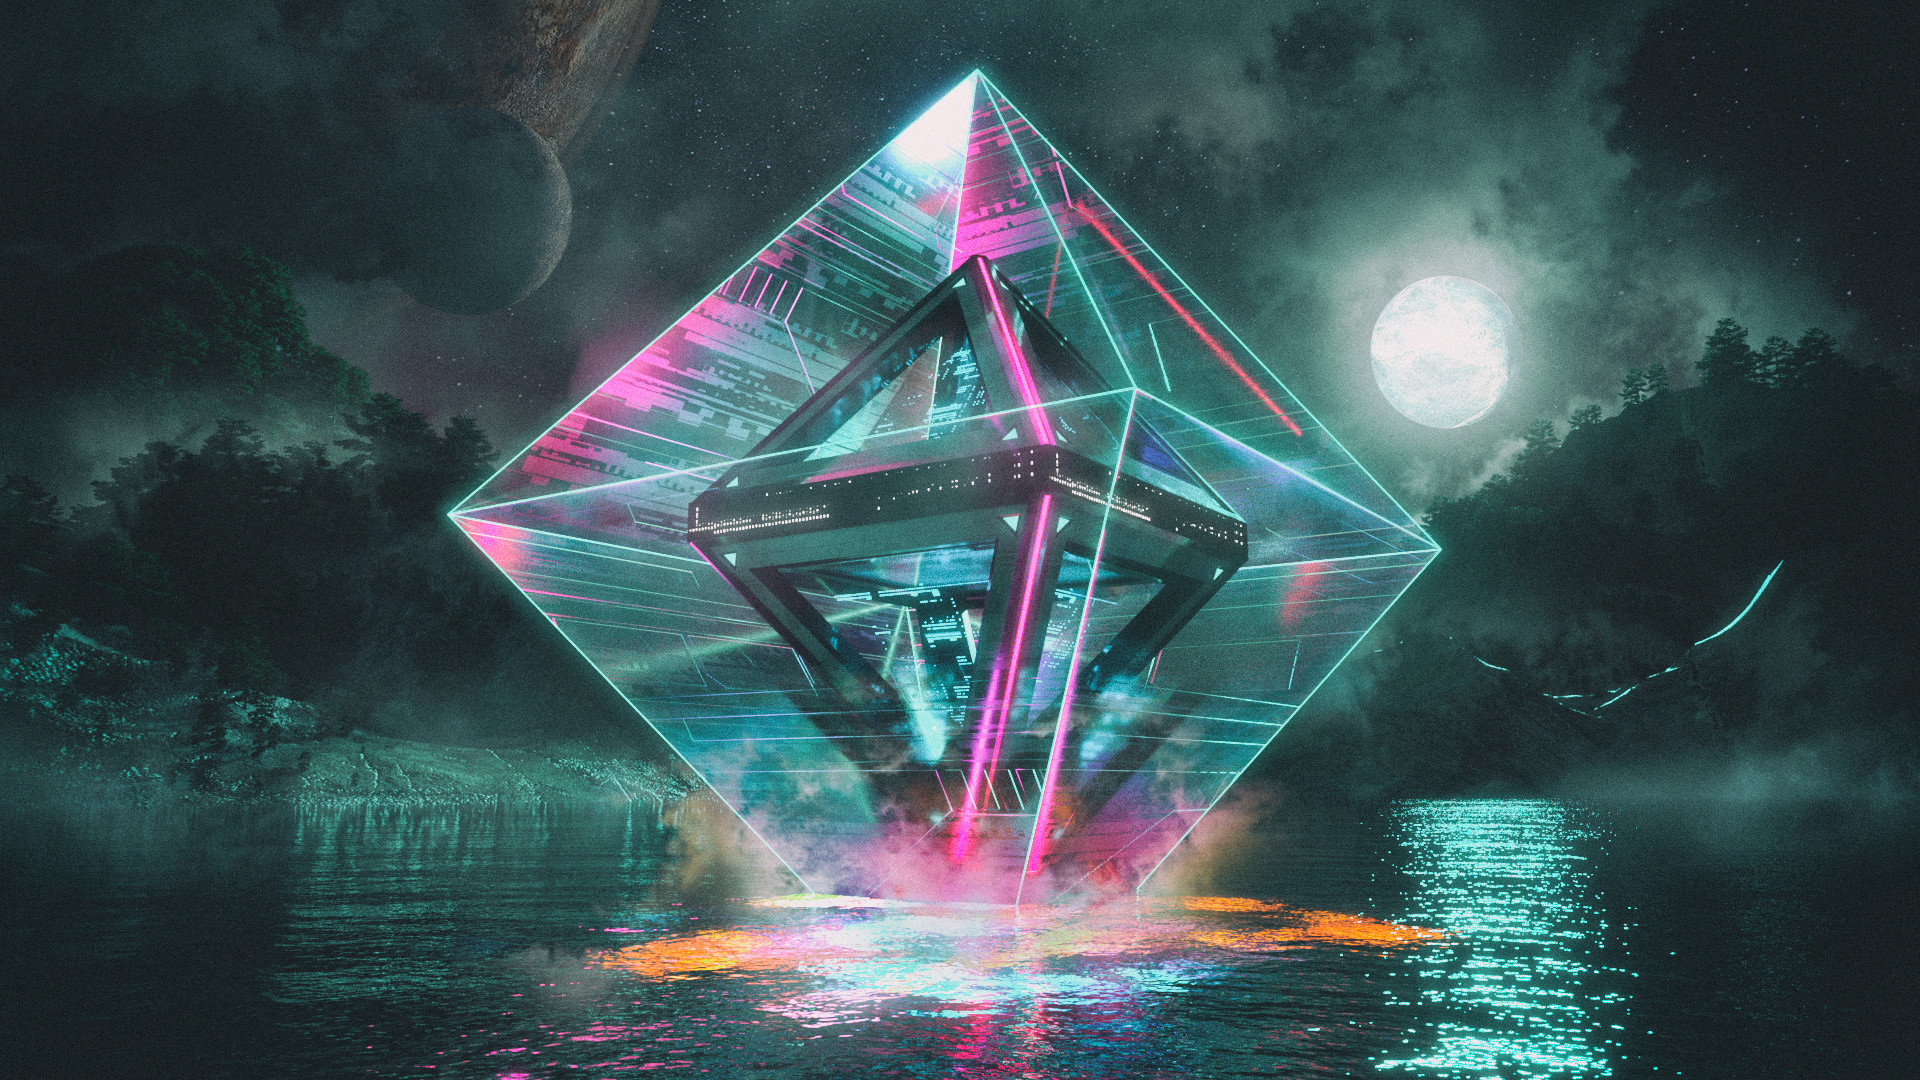 General 1920x1080 David Legnon cyberpunk neon prism Moon water reflection science fiction planet mist night cyan